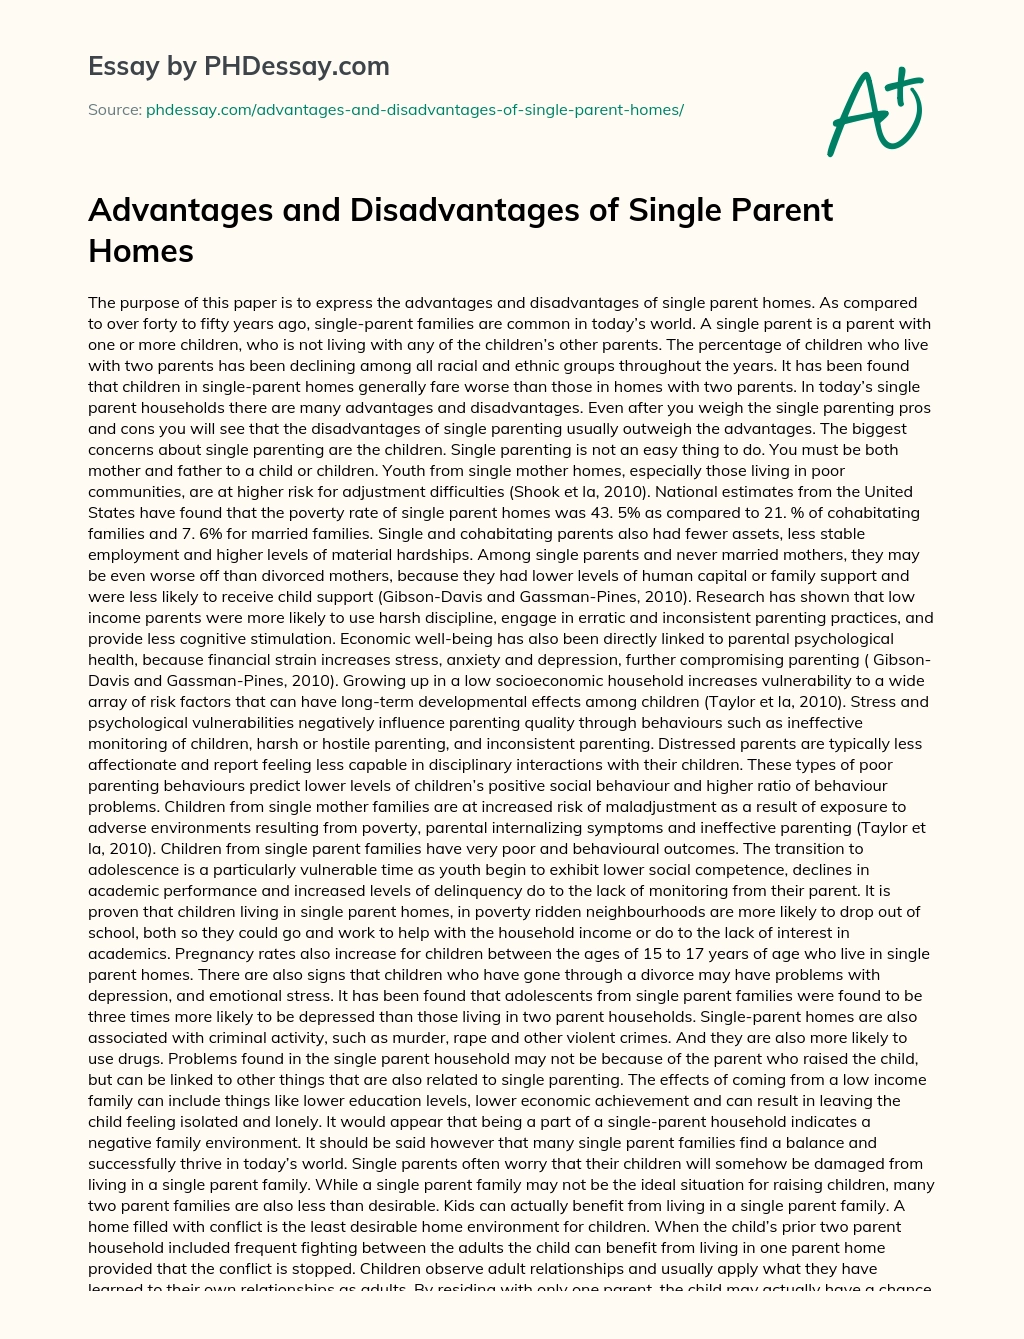 Advantages and Disadvantages of Single Parent Homes essay